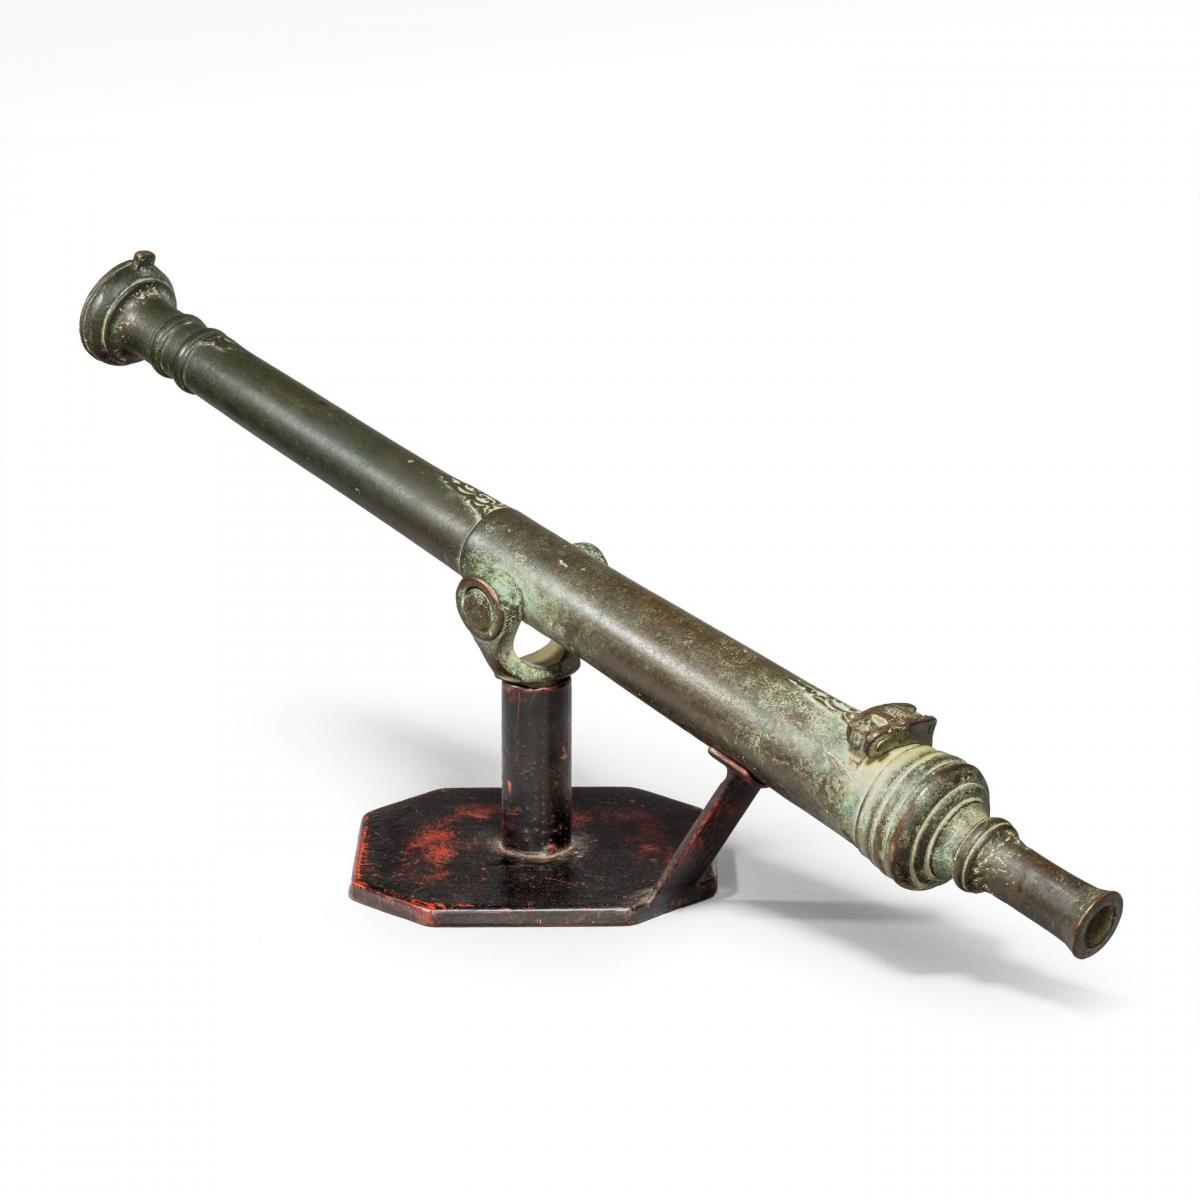 Late 18th century Lantaka bronze cannon barrel